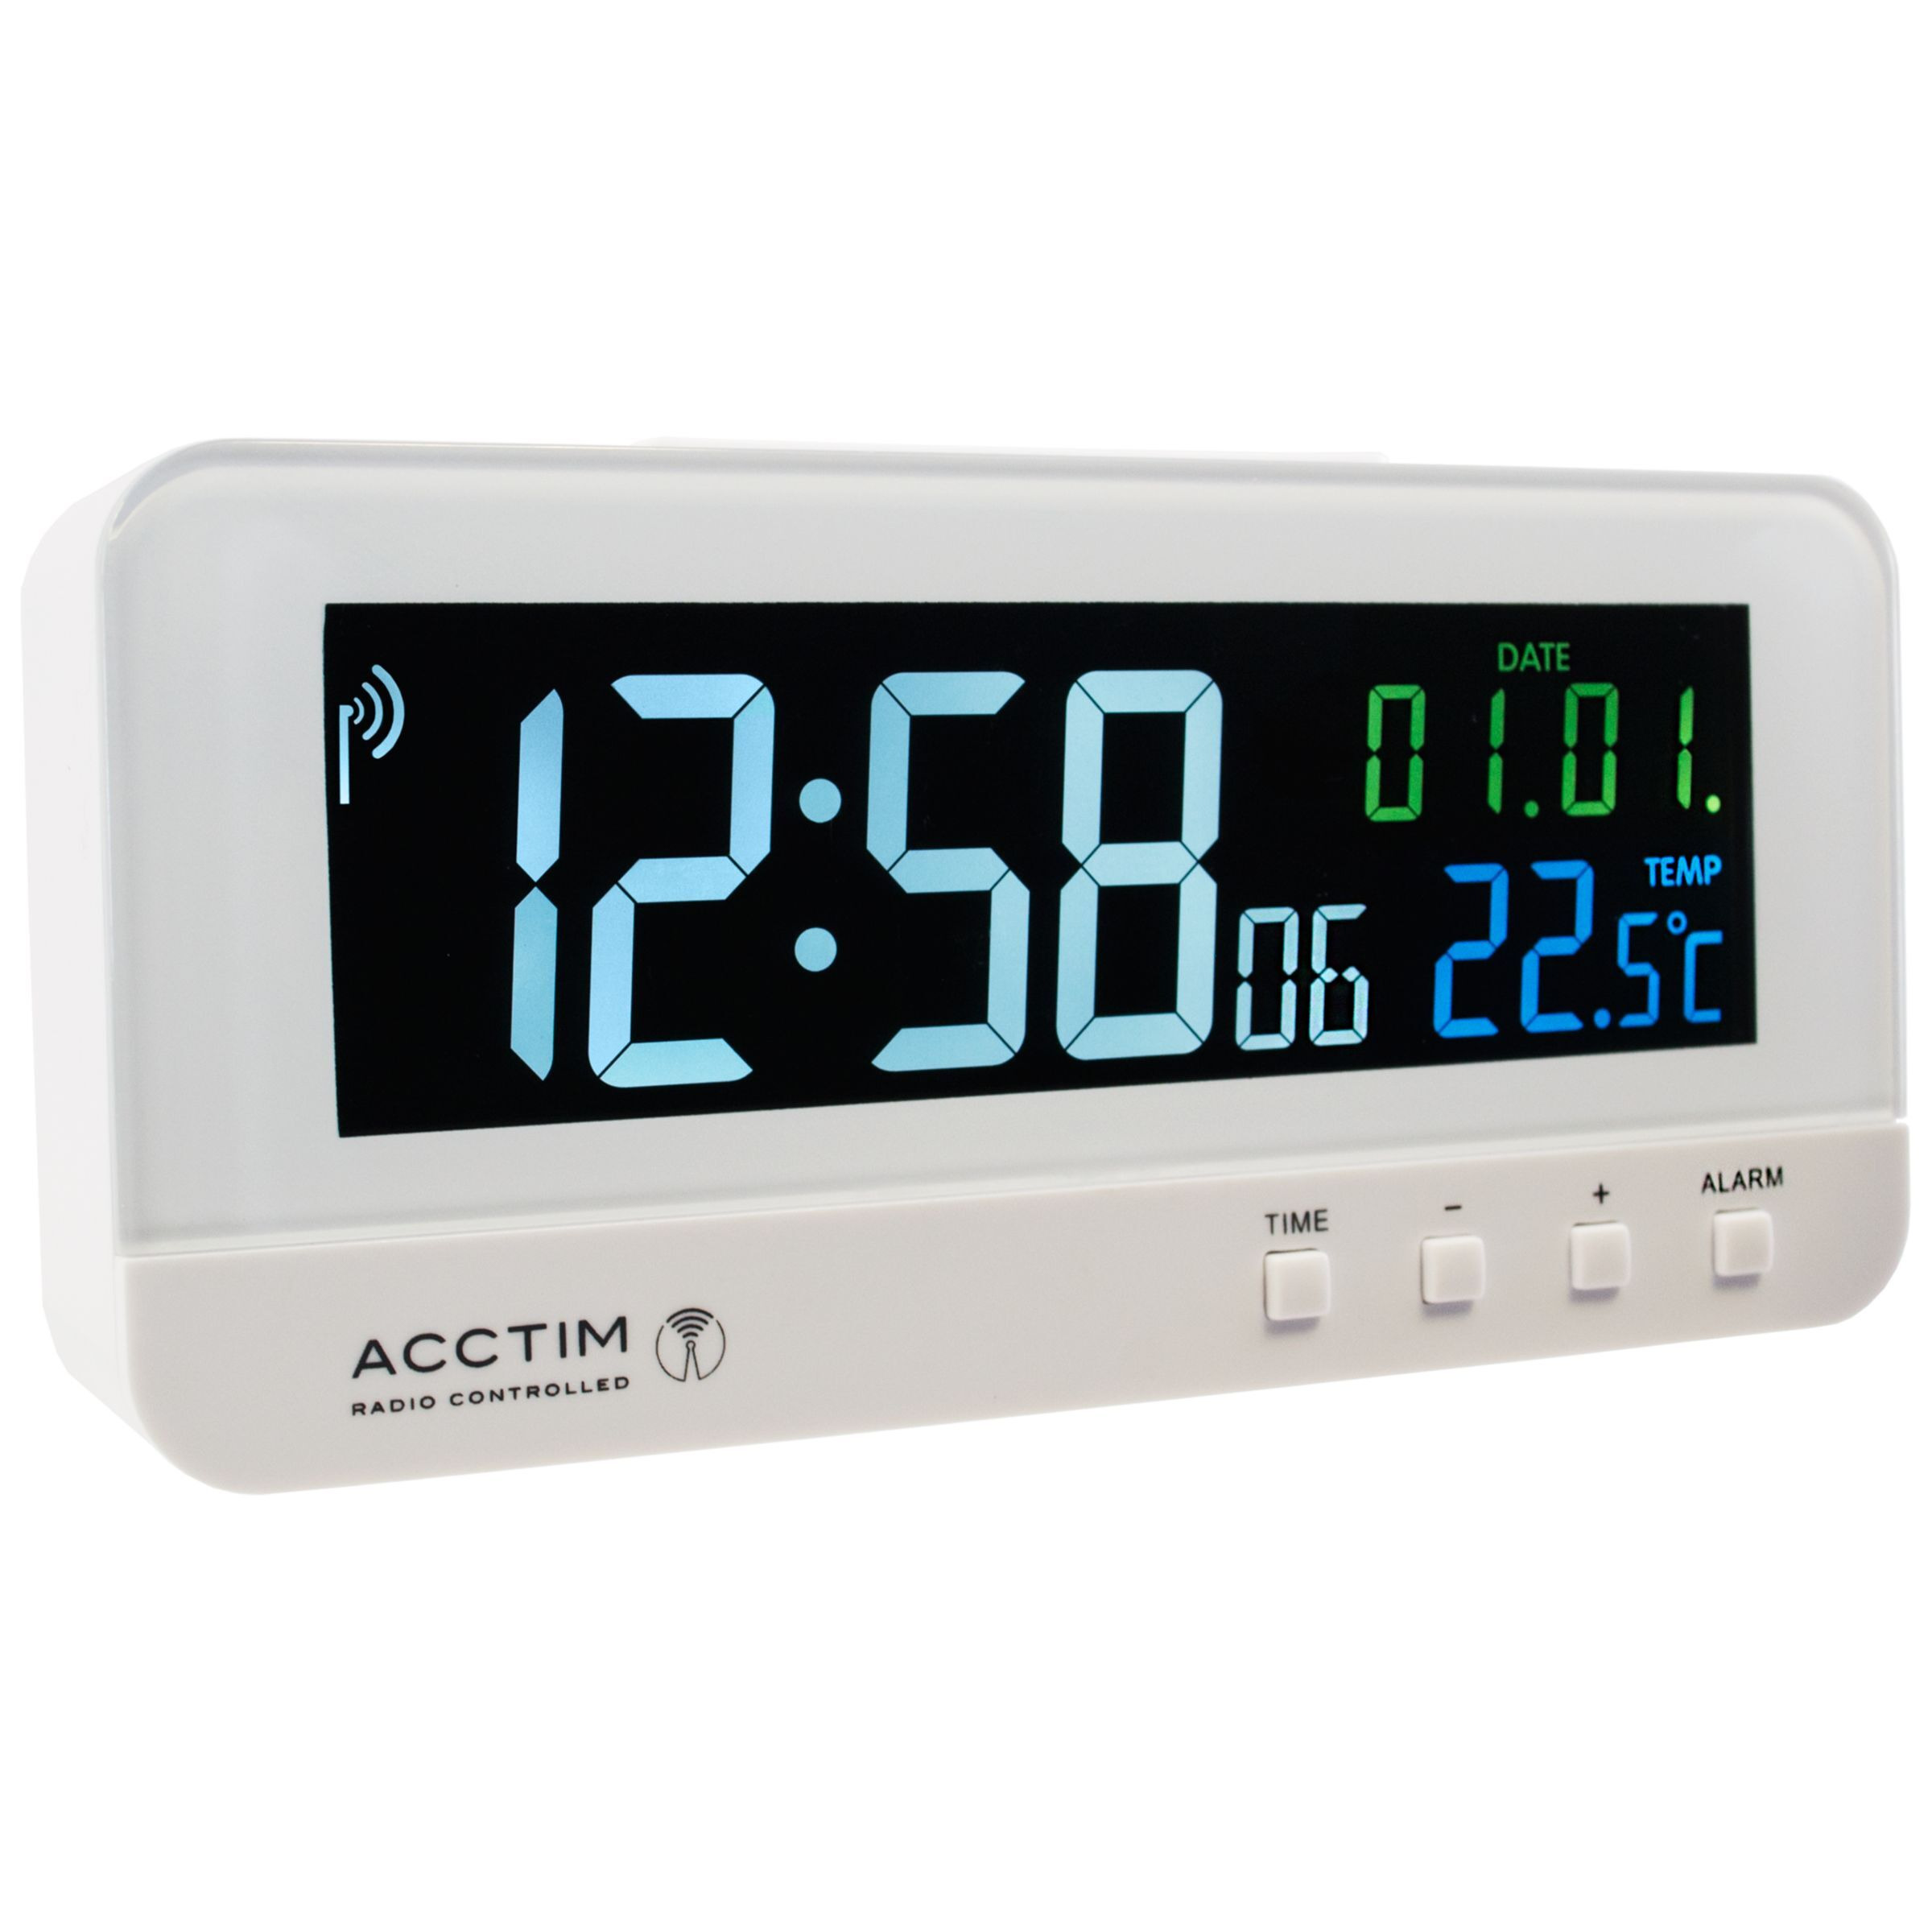 Acctim Radio Controlled LCD Digital Alarm Clock, White - image 1